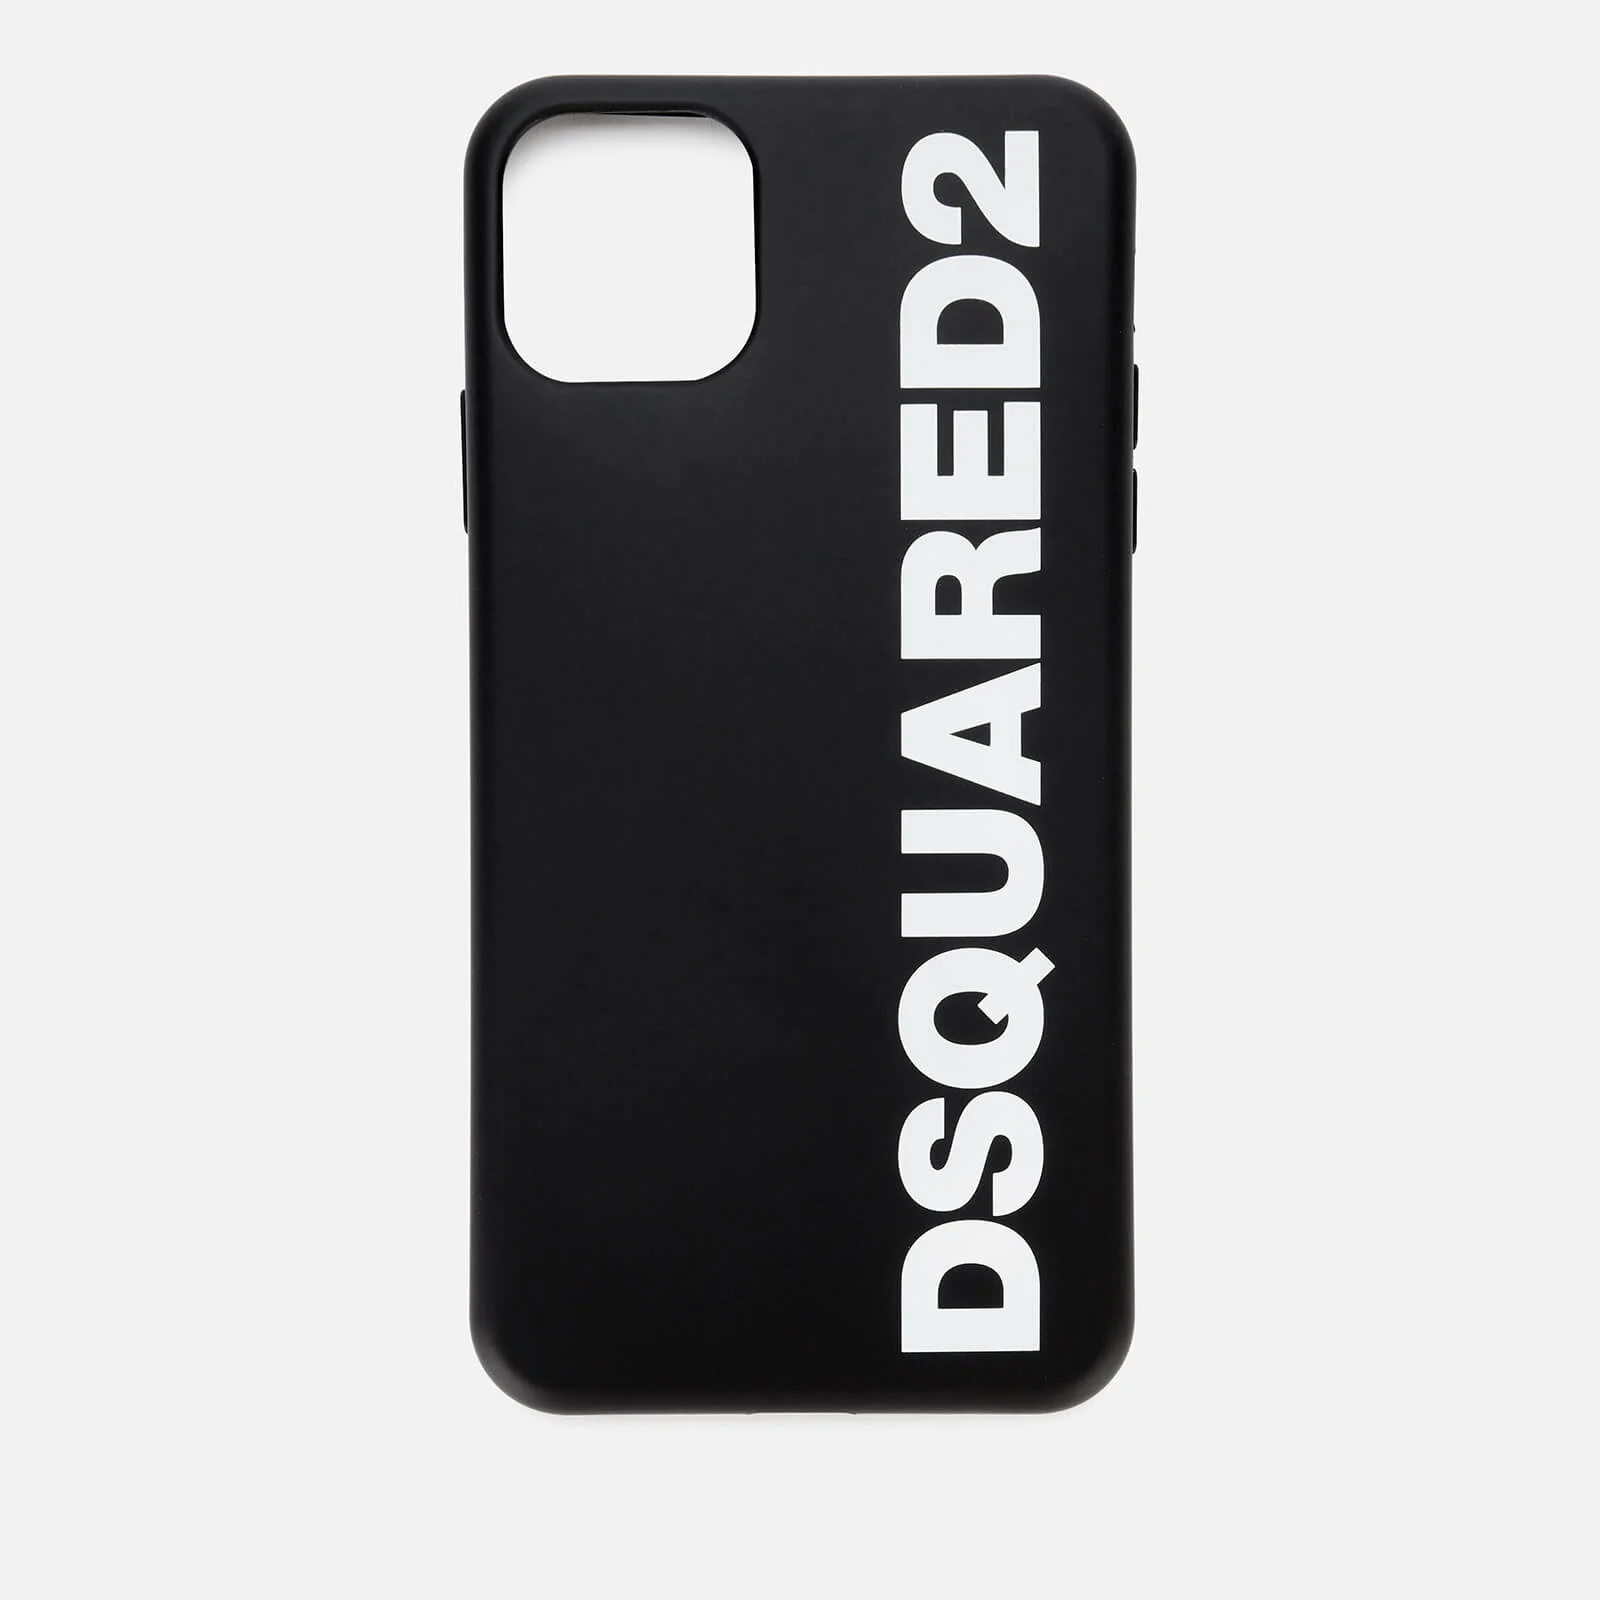 Dsquared2 Men's iPhone 11 Pro Max Case - Black Image 1